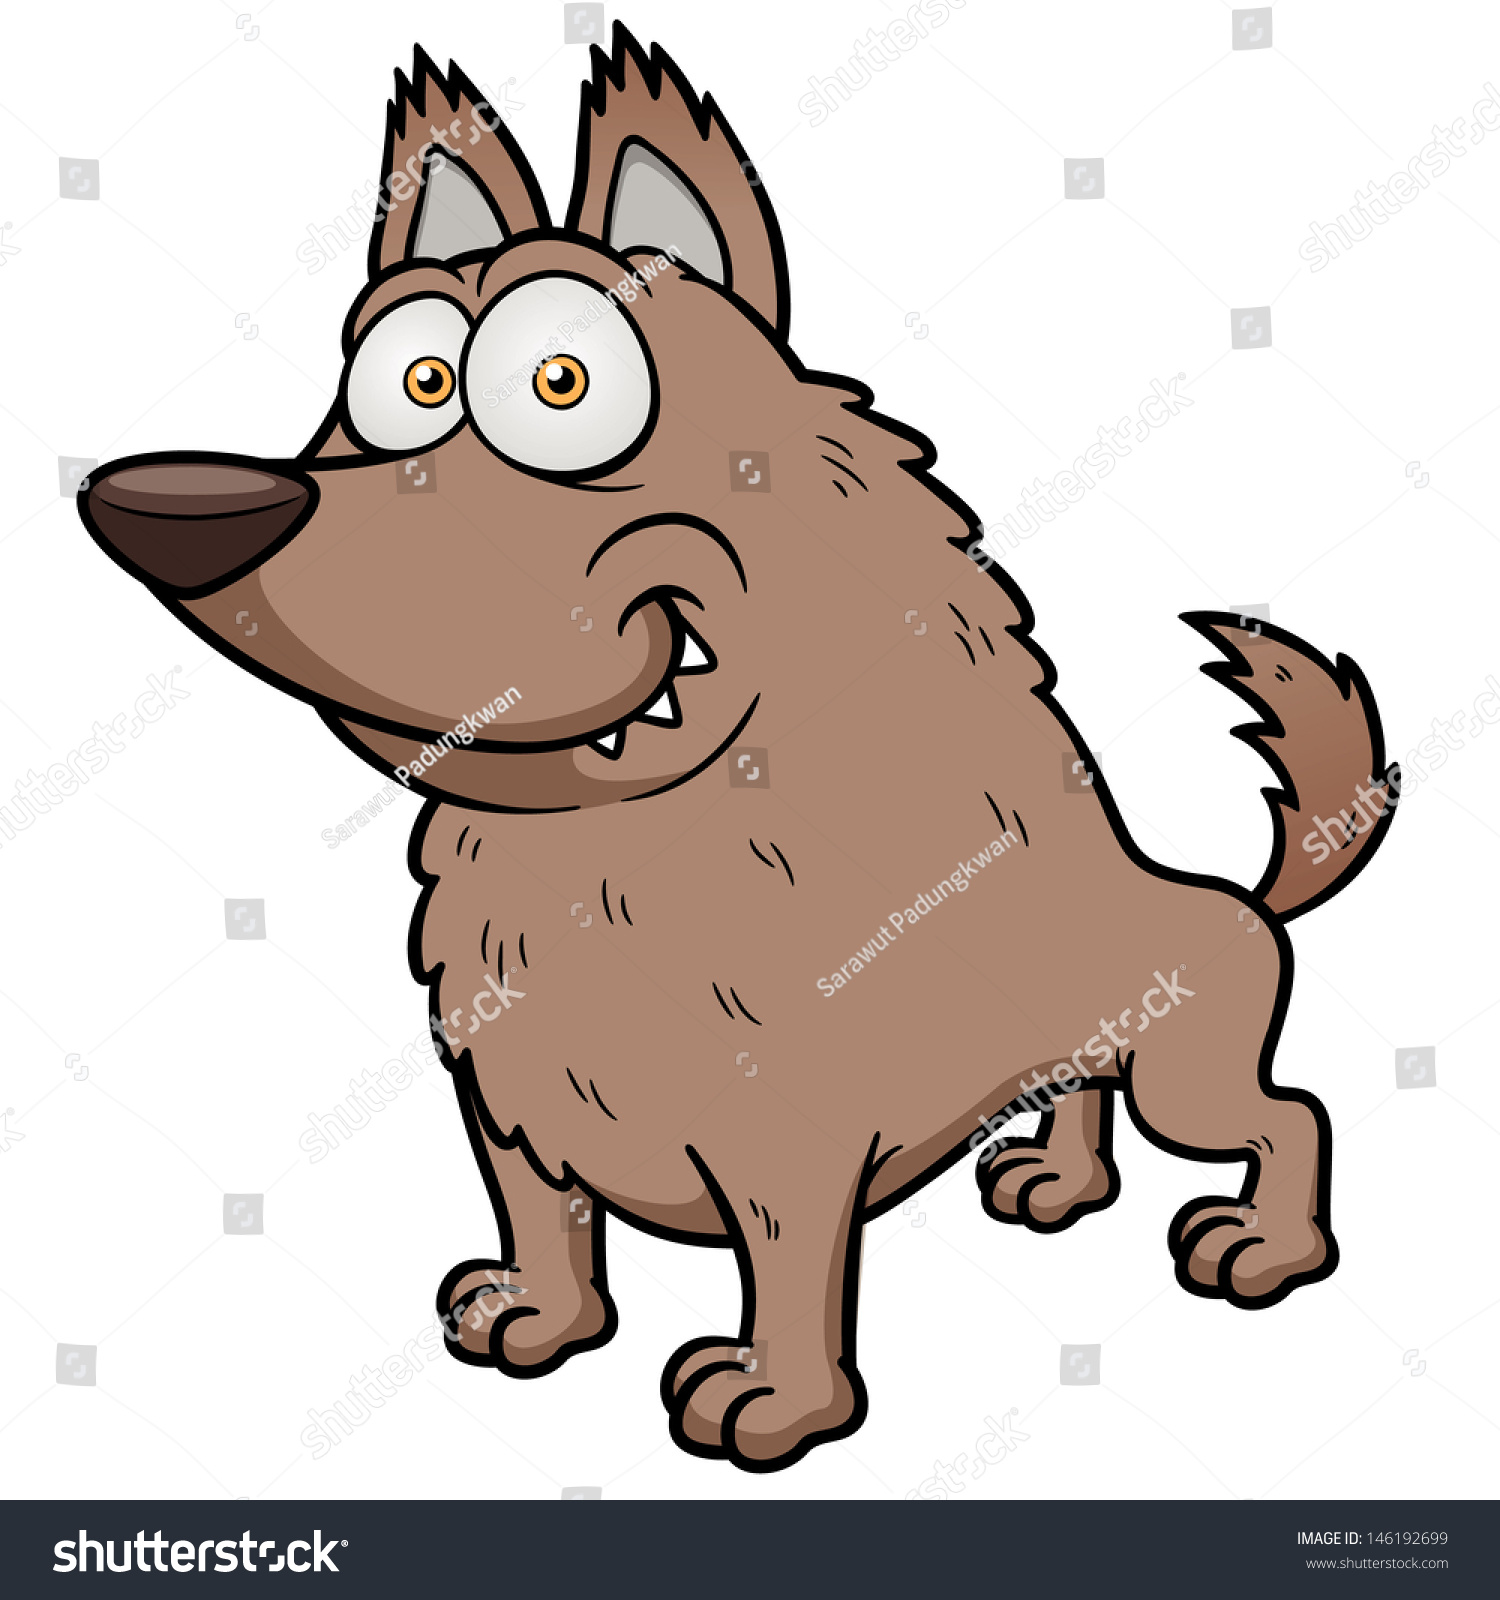 Vector Illustration Of Cartoon Wolf - 146192699 : Shutterstock